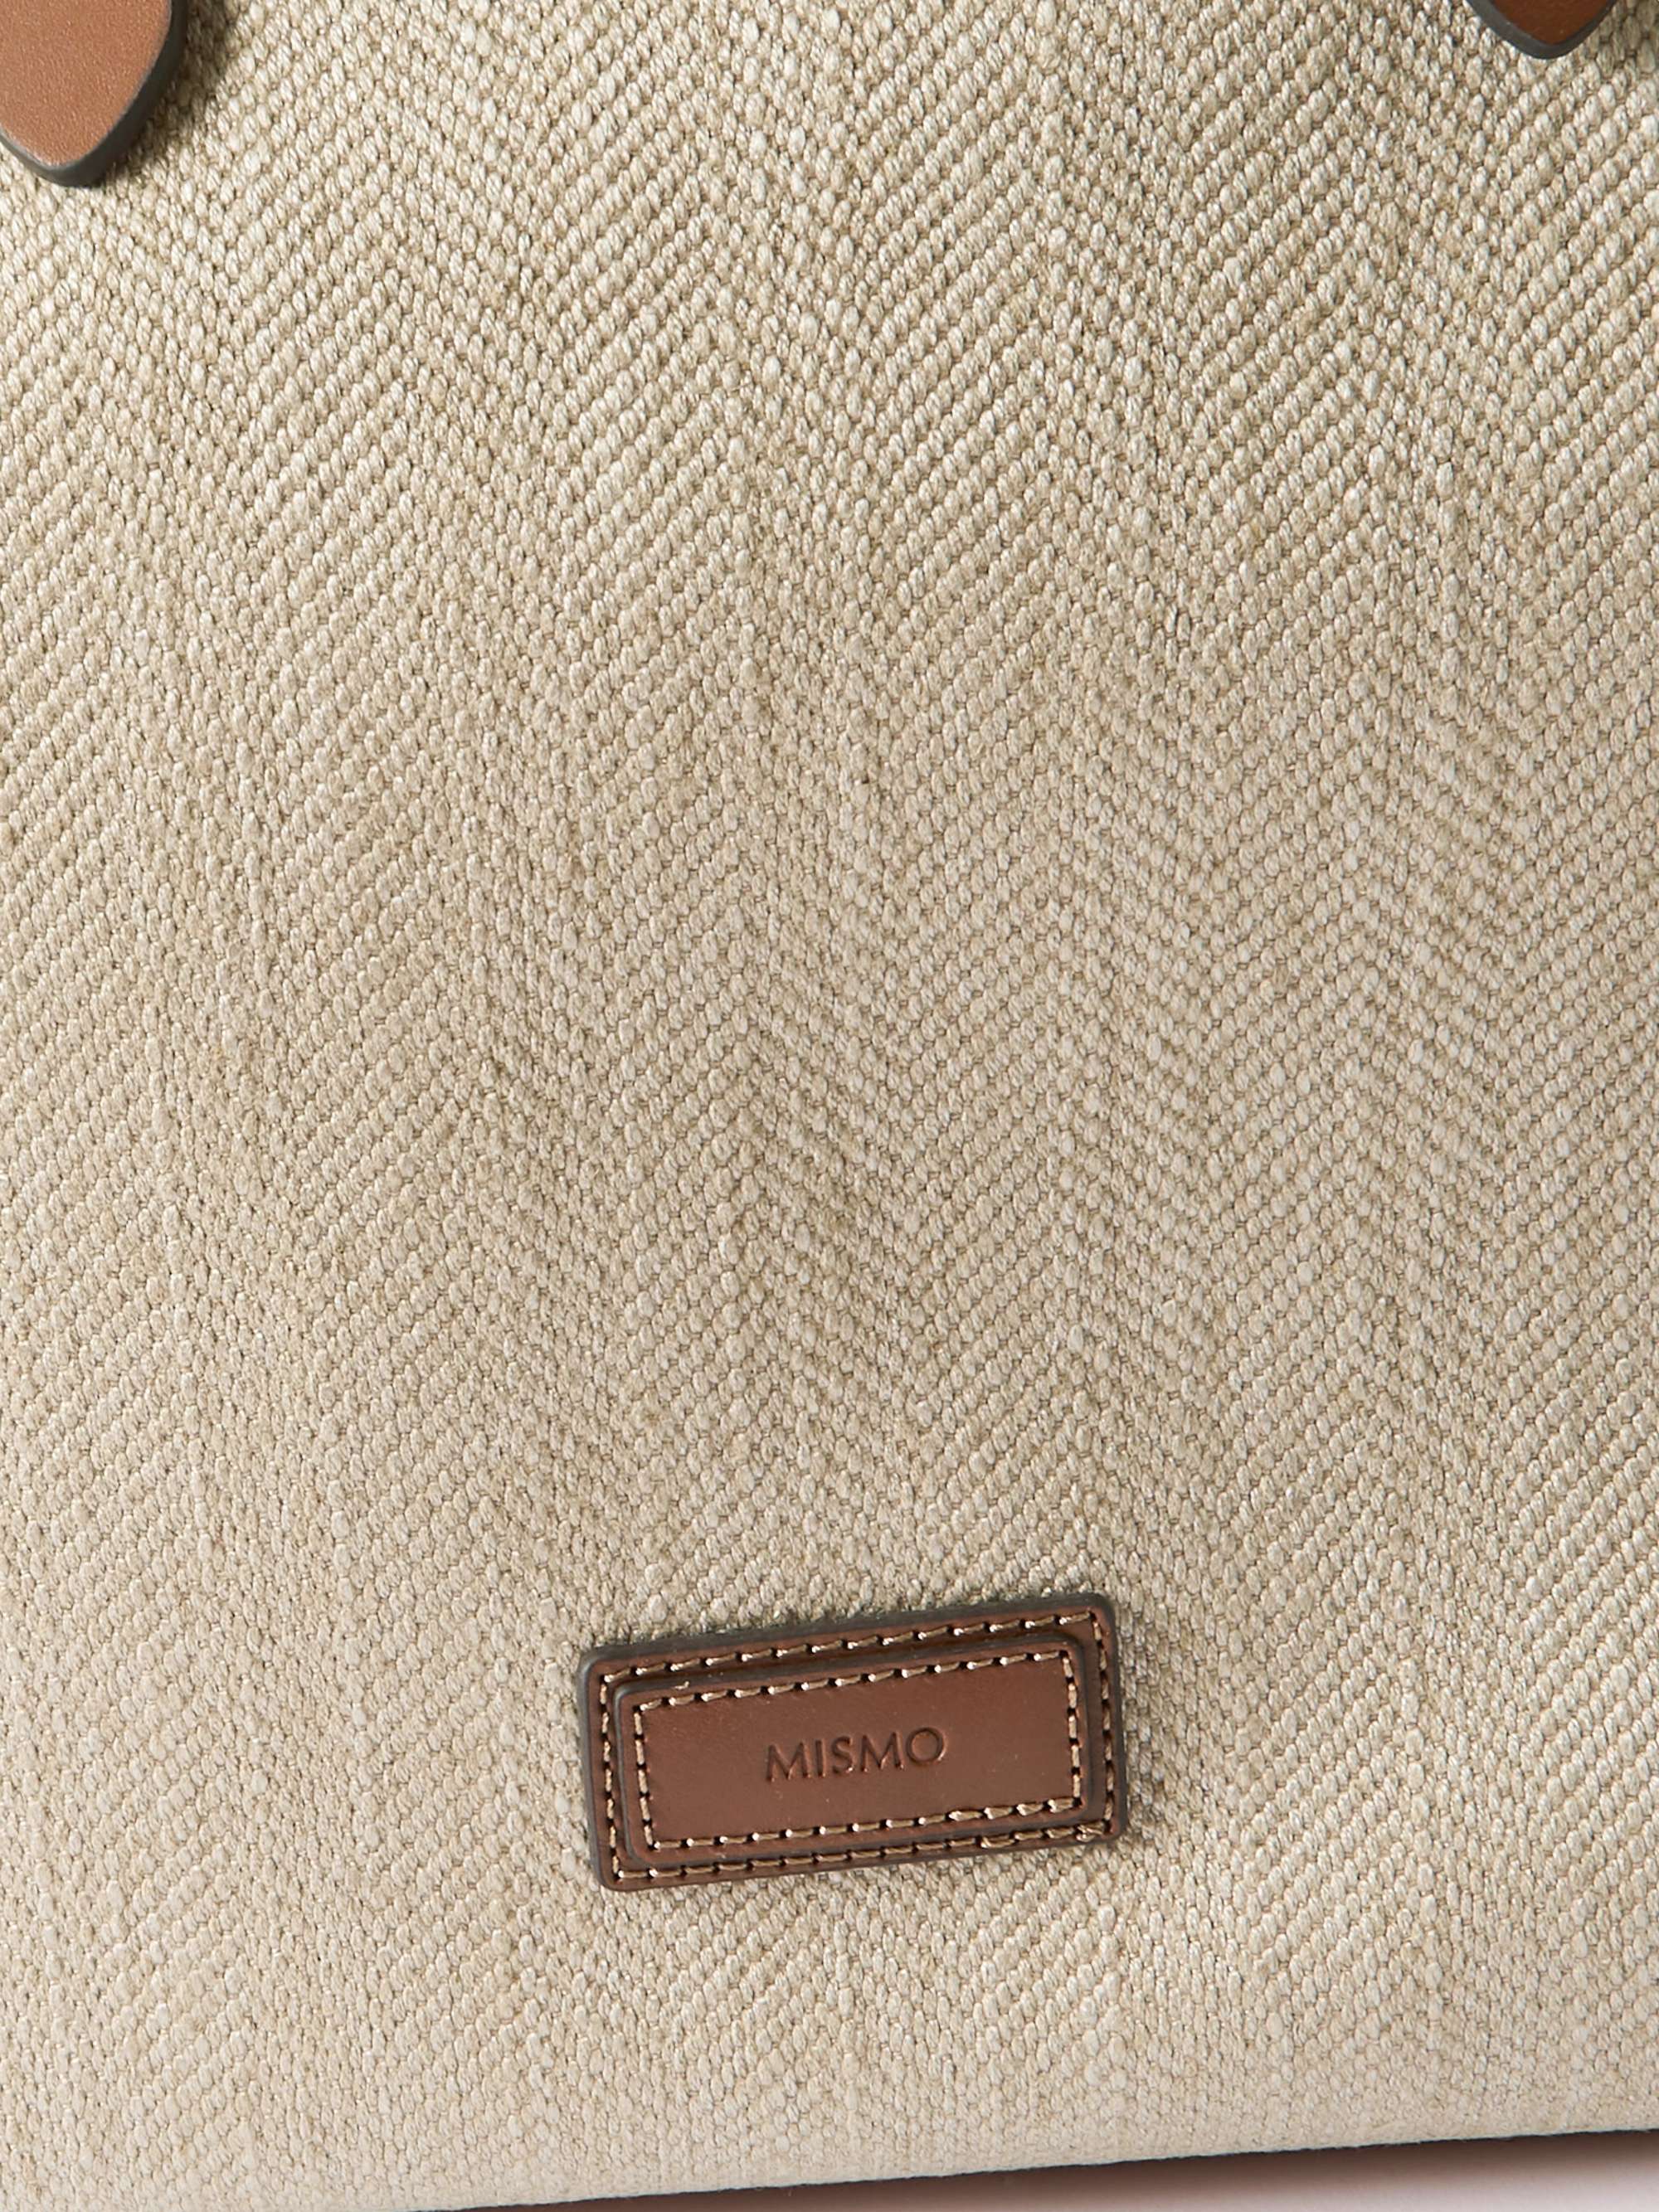 MISMO Leather-Trimmed Herringbone Canvas Tote Bag